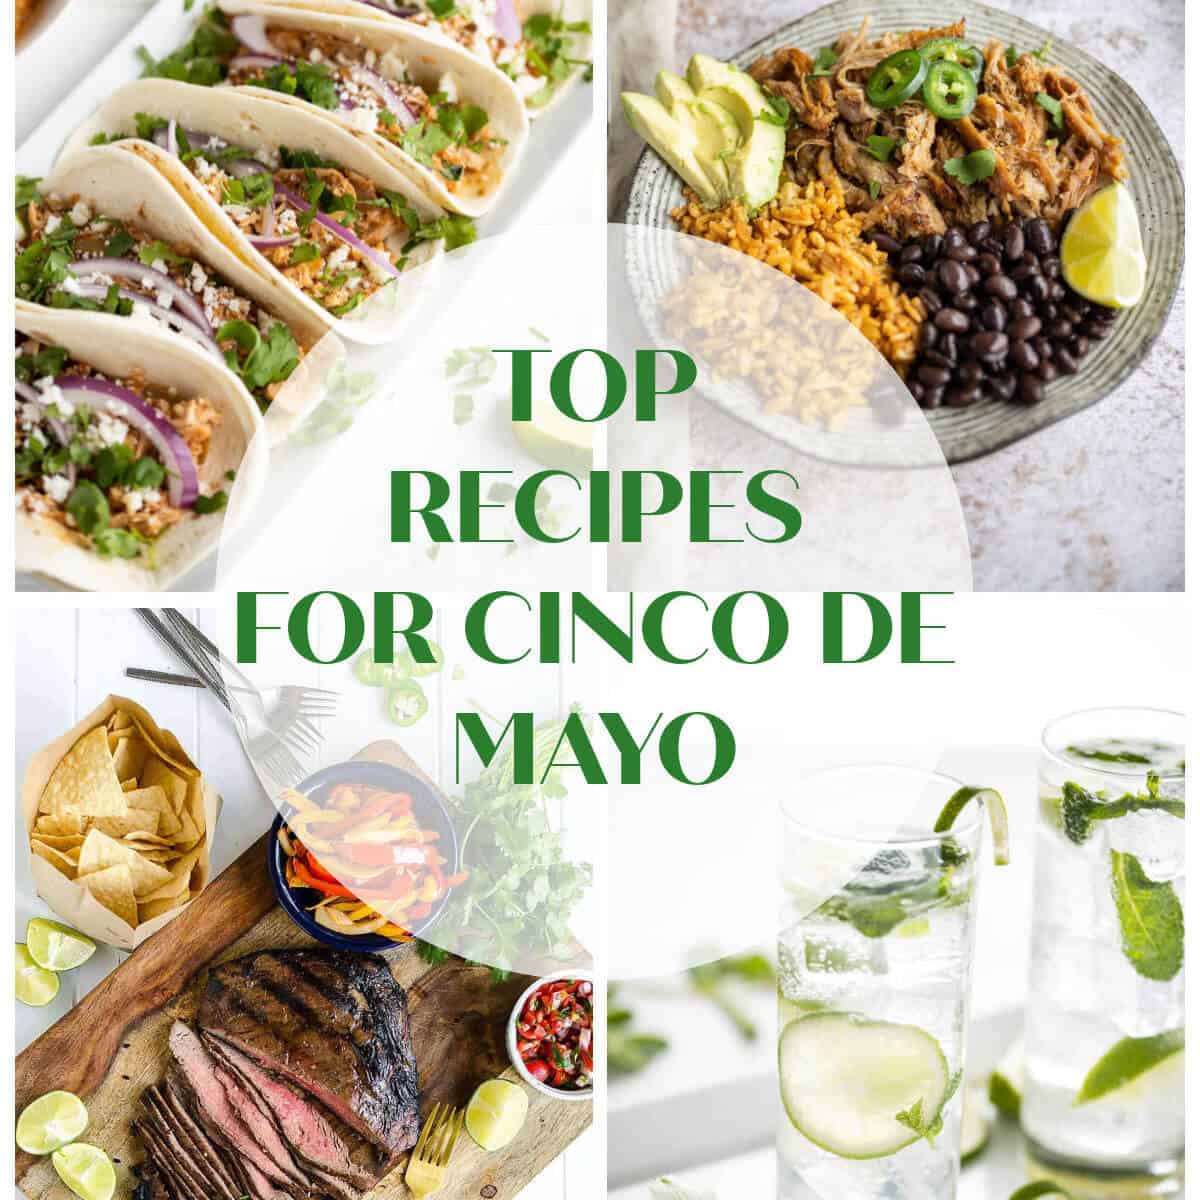 4 image collage showing recipe ideas for Cinco De Mayo, including, chicken tinga, carnitas, steak fajitas and mojitos.